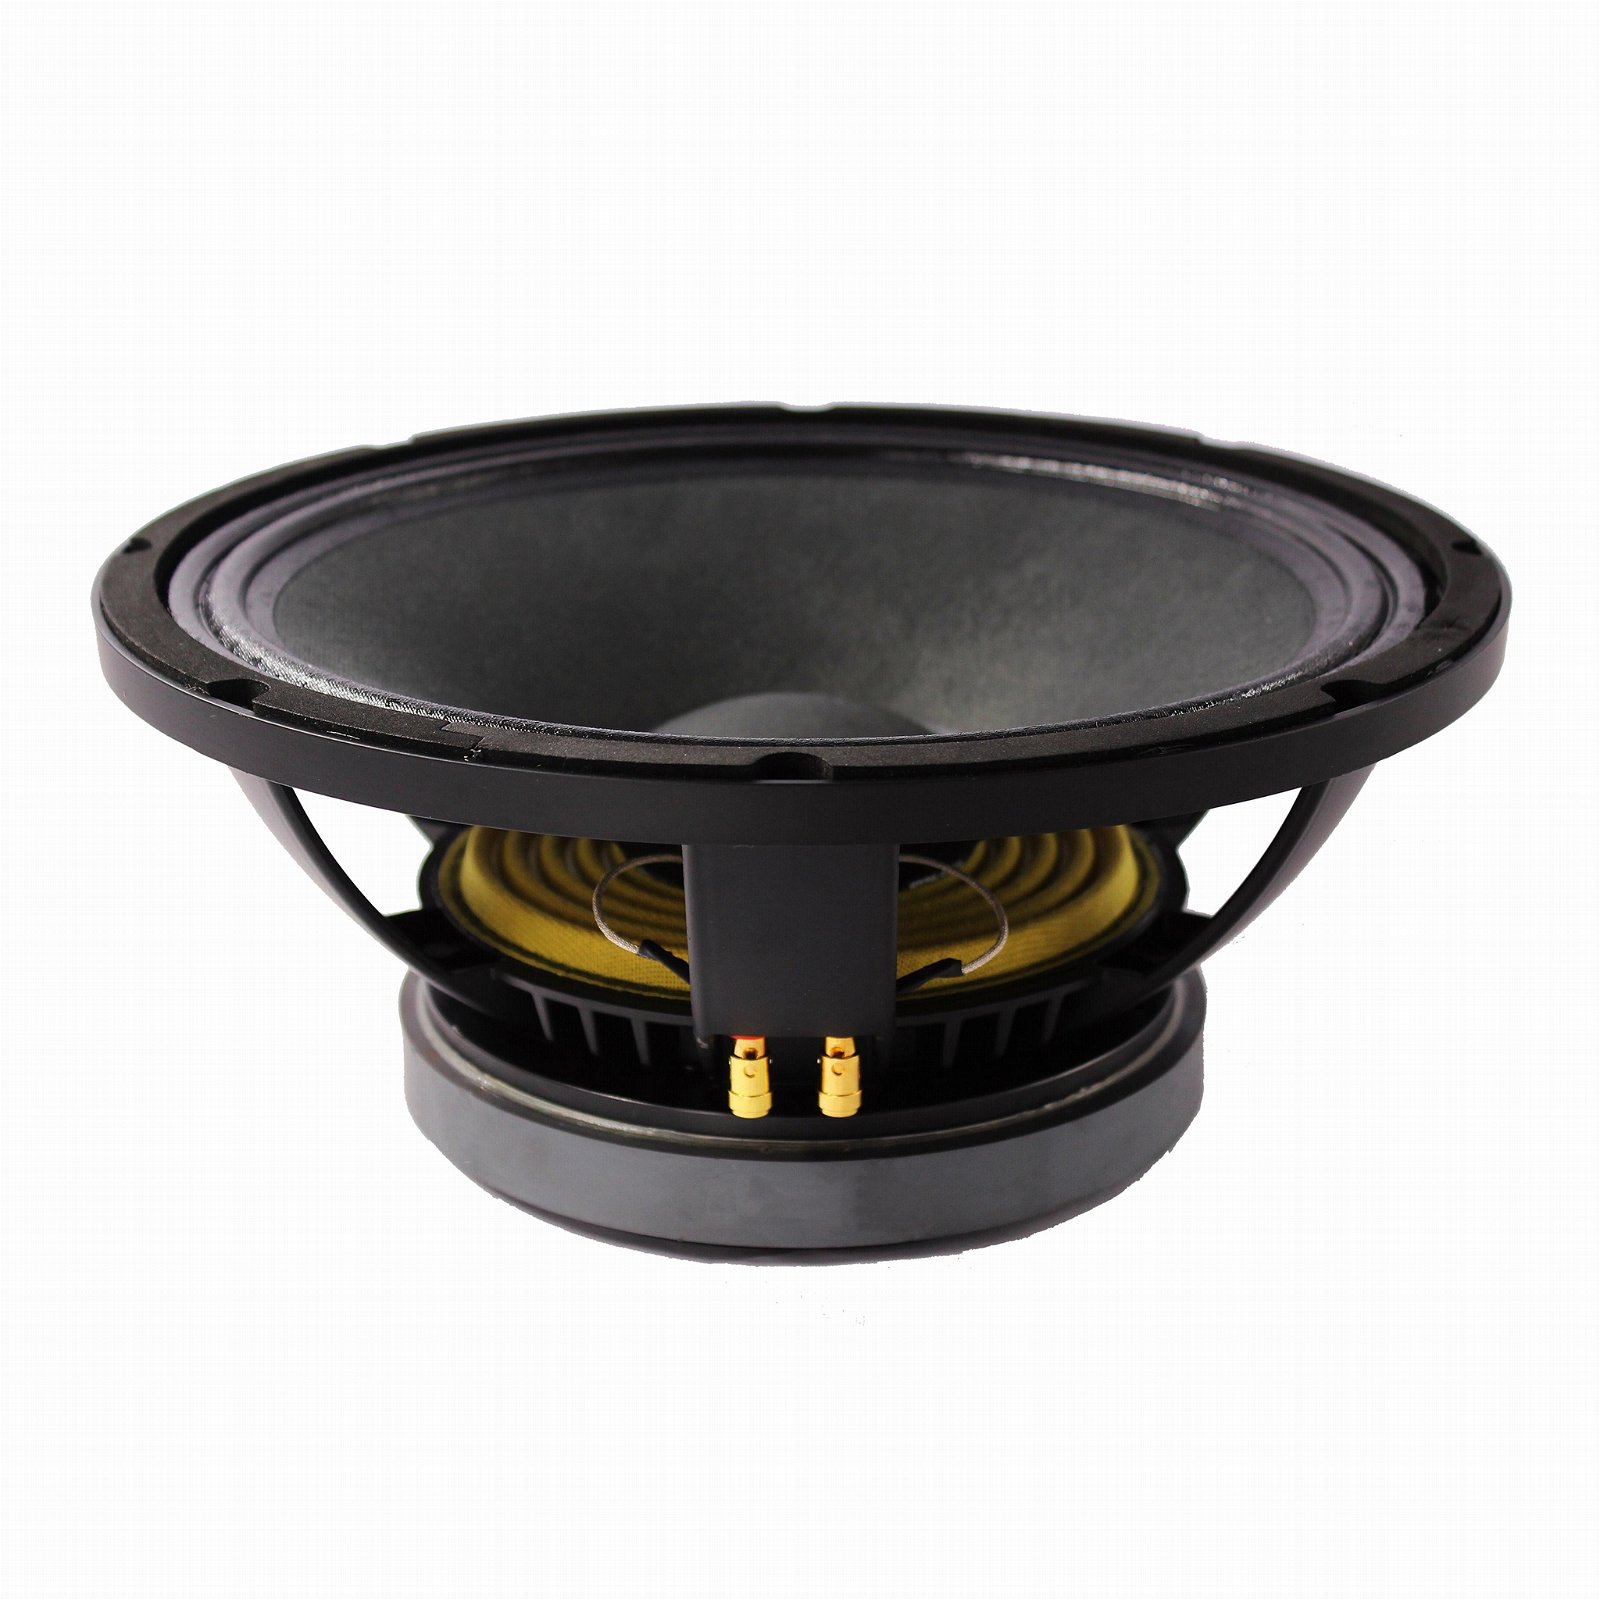 speaker - 12AH975 - DERWEL (China Manufacturer) - Speaker,Trumpet & Buzzer  - Electronic Components Products - DIYTrade China manufacturers